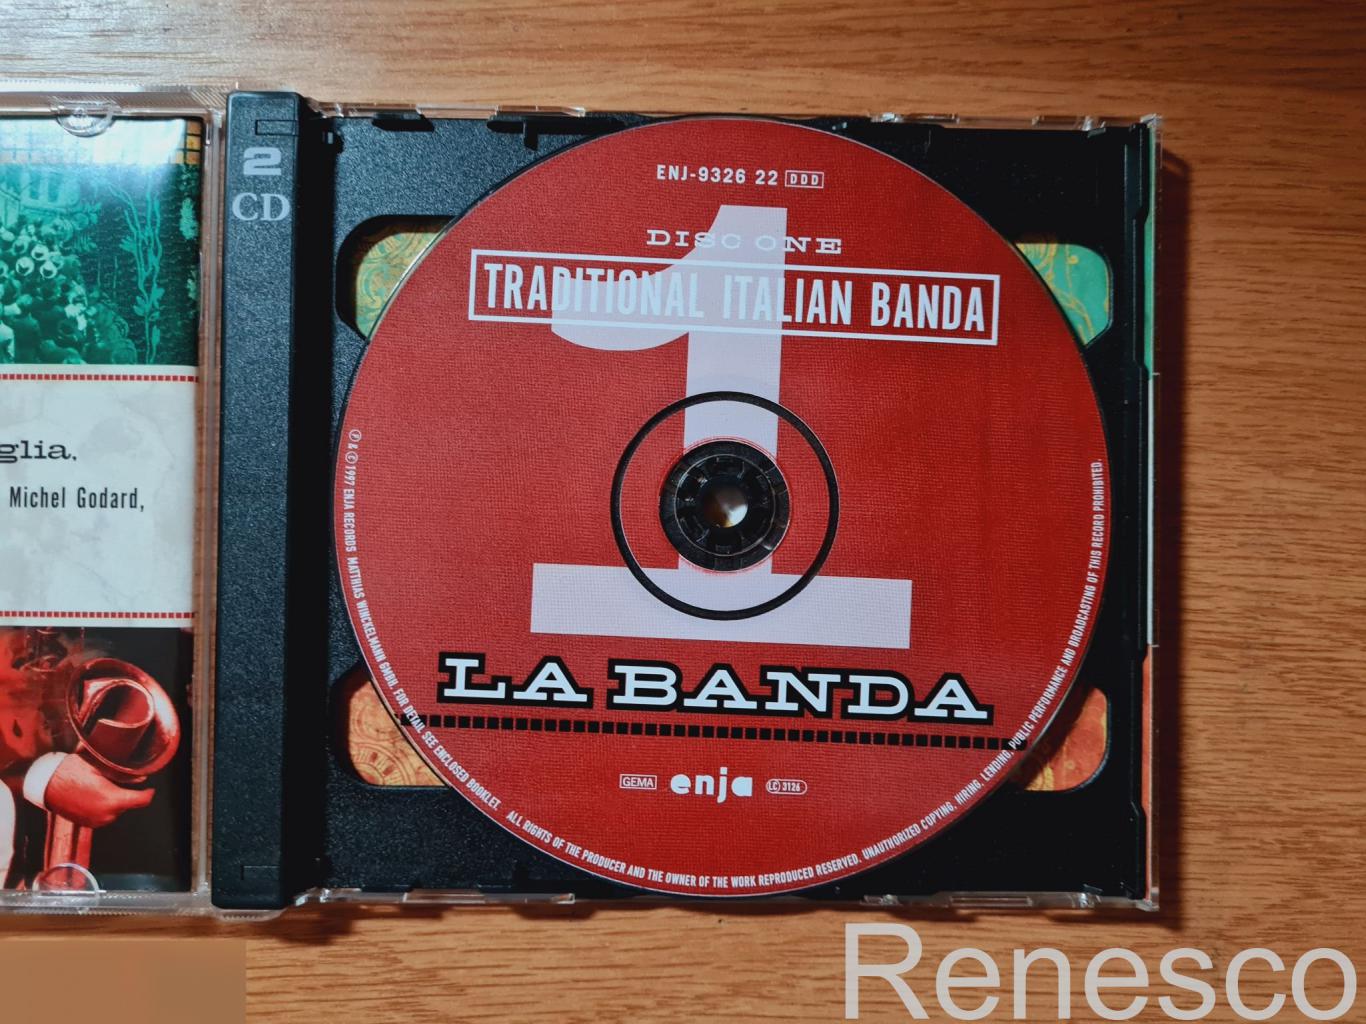 La Banda – Traditional Italian Banda / Banda And Jazz (Europe) (1997) 4